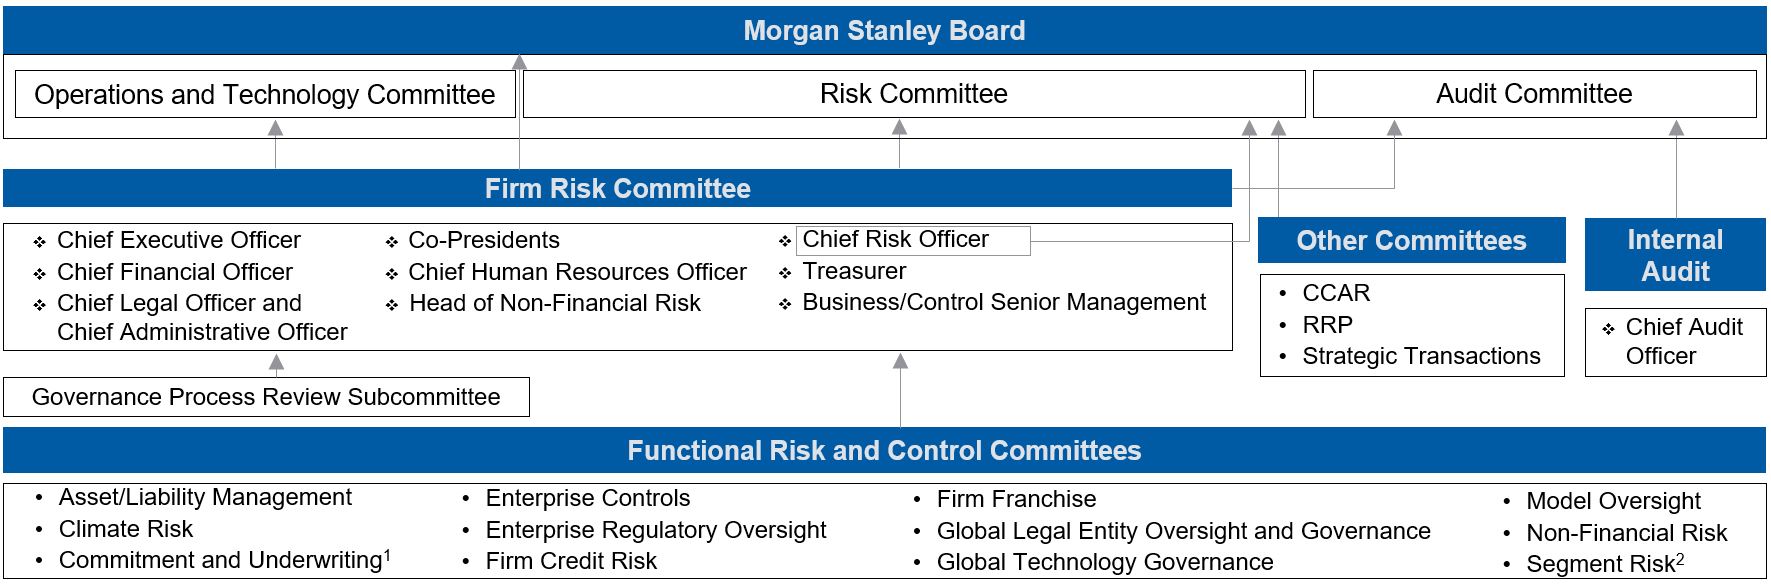 4Q23 Morgan Stanley ERM Framwork chart 01.25.2024.jpg